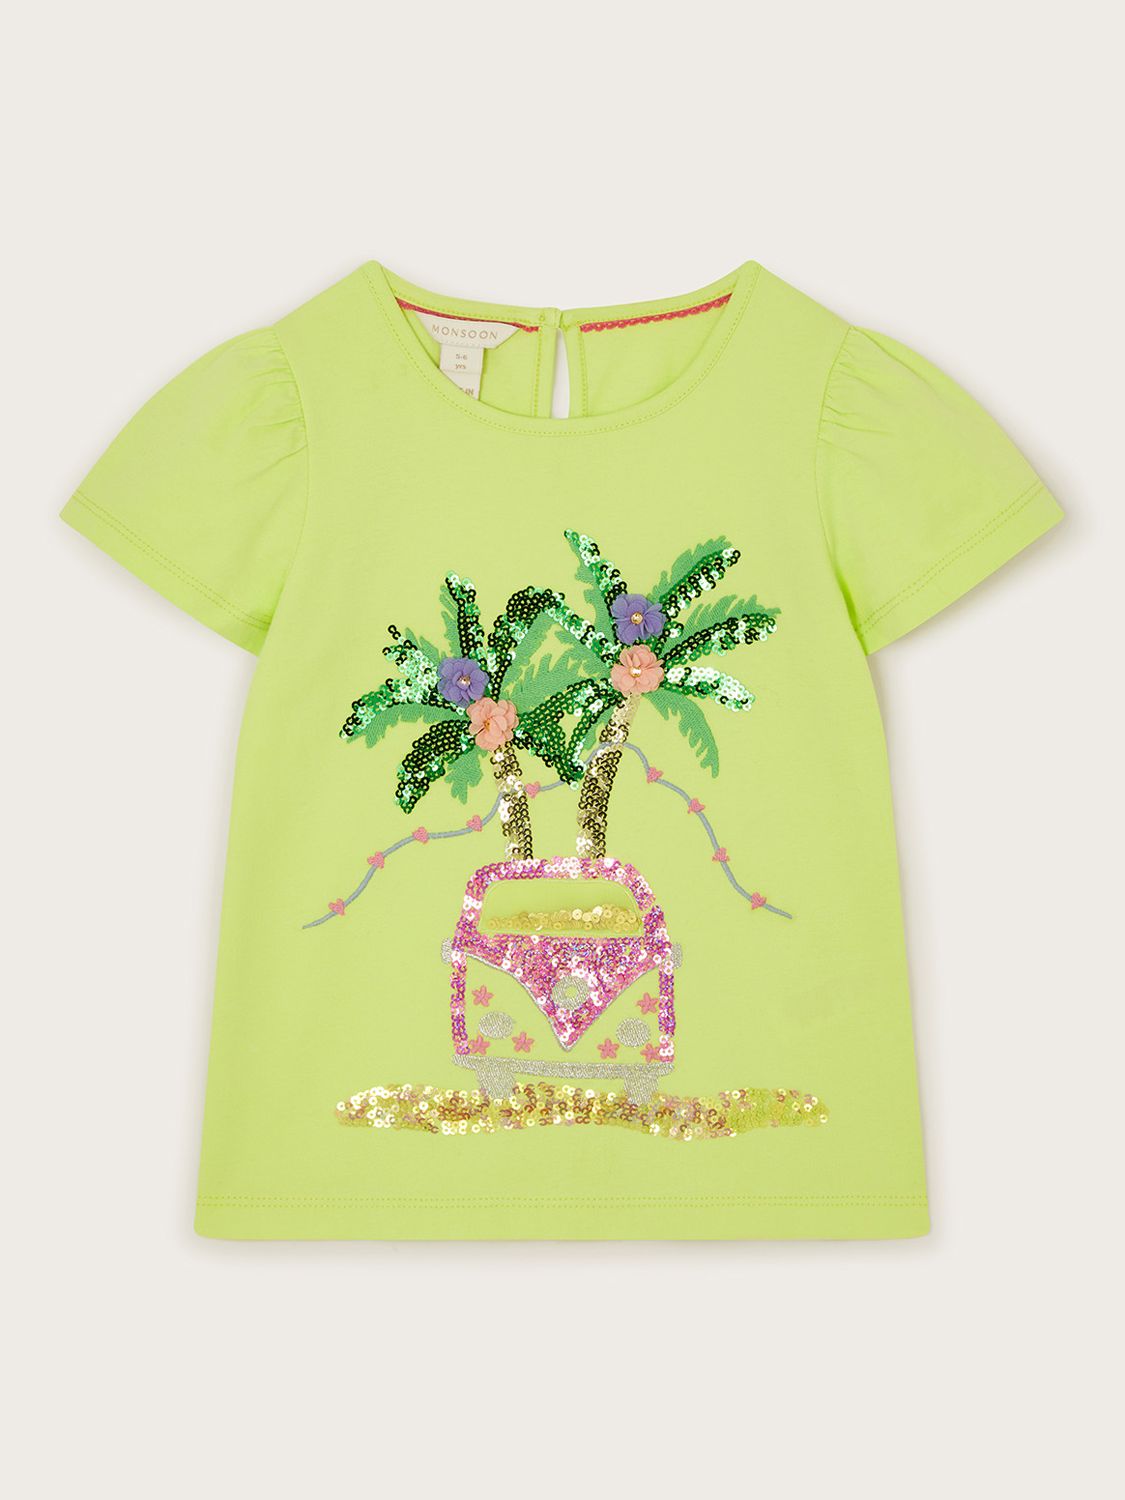 Monsoon Kids' Sequin Embellished Campervan T-Shirt, Lime/Multi, 3-4 years